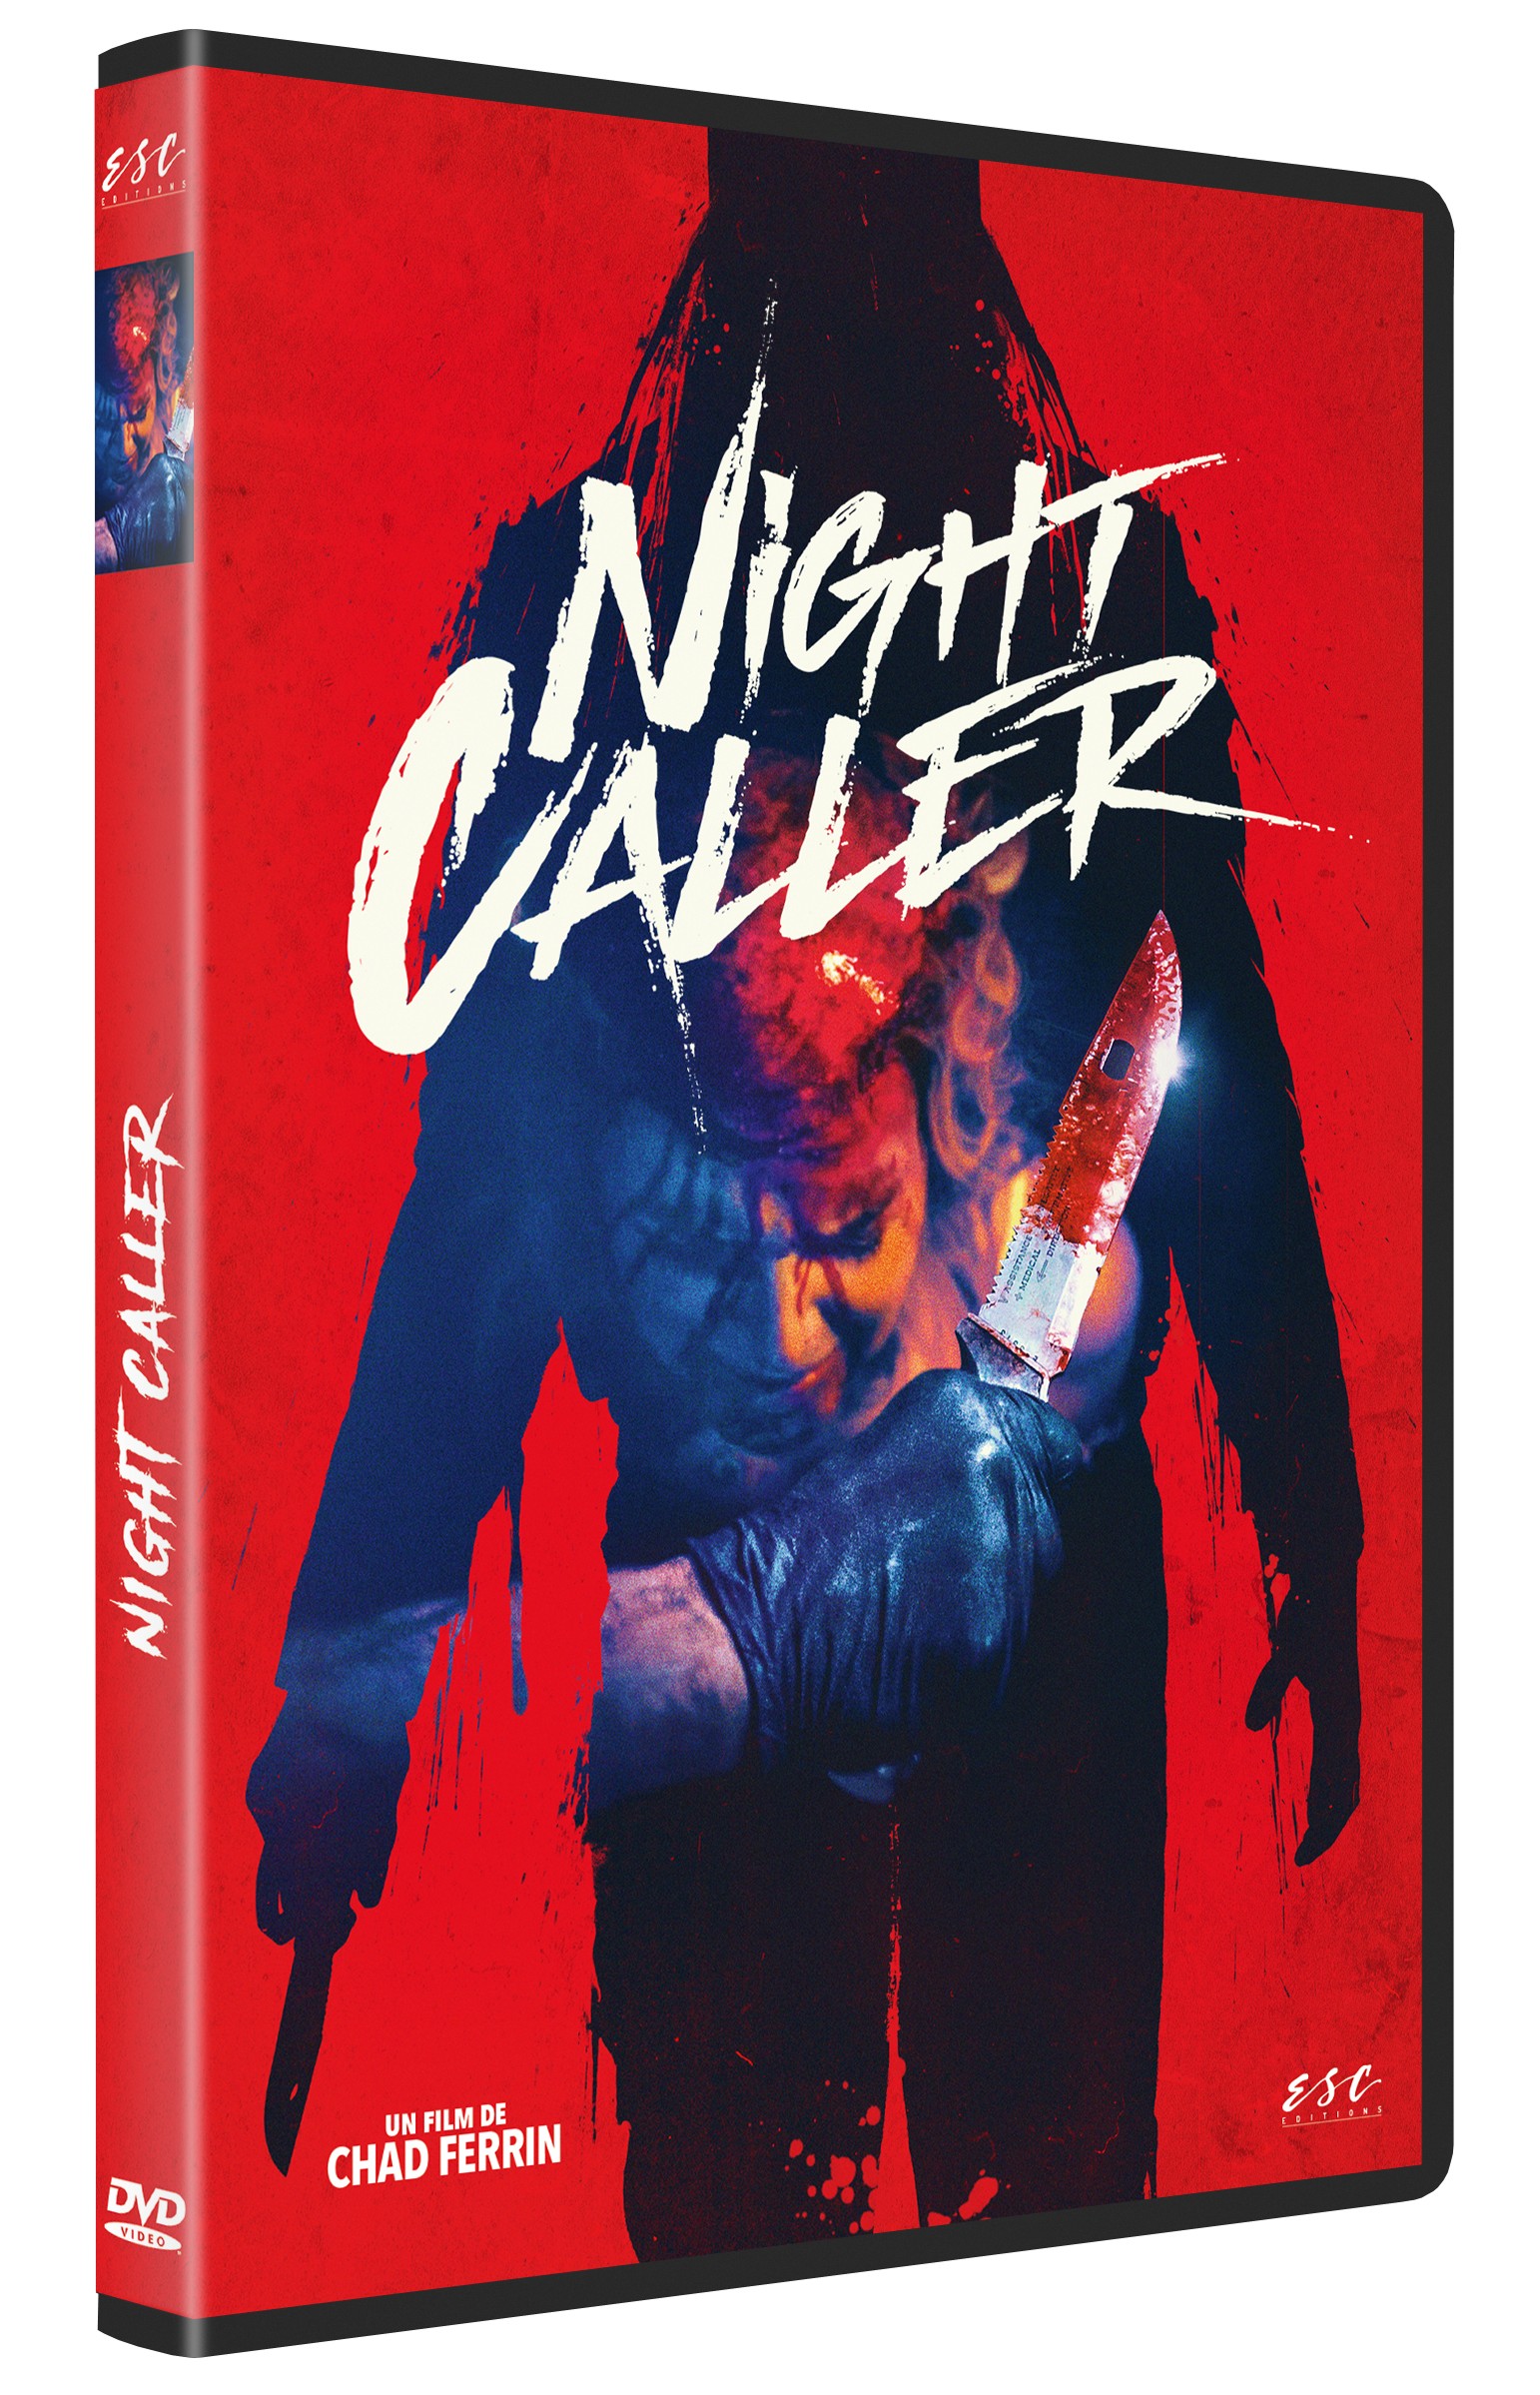 NIGHT CALLER - DVD